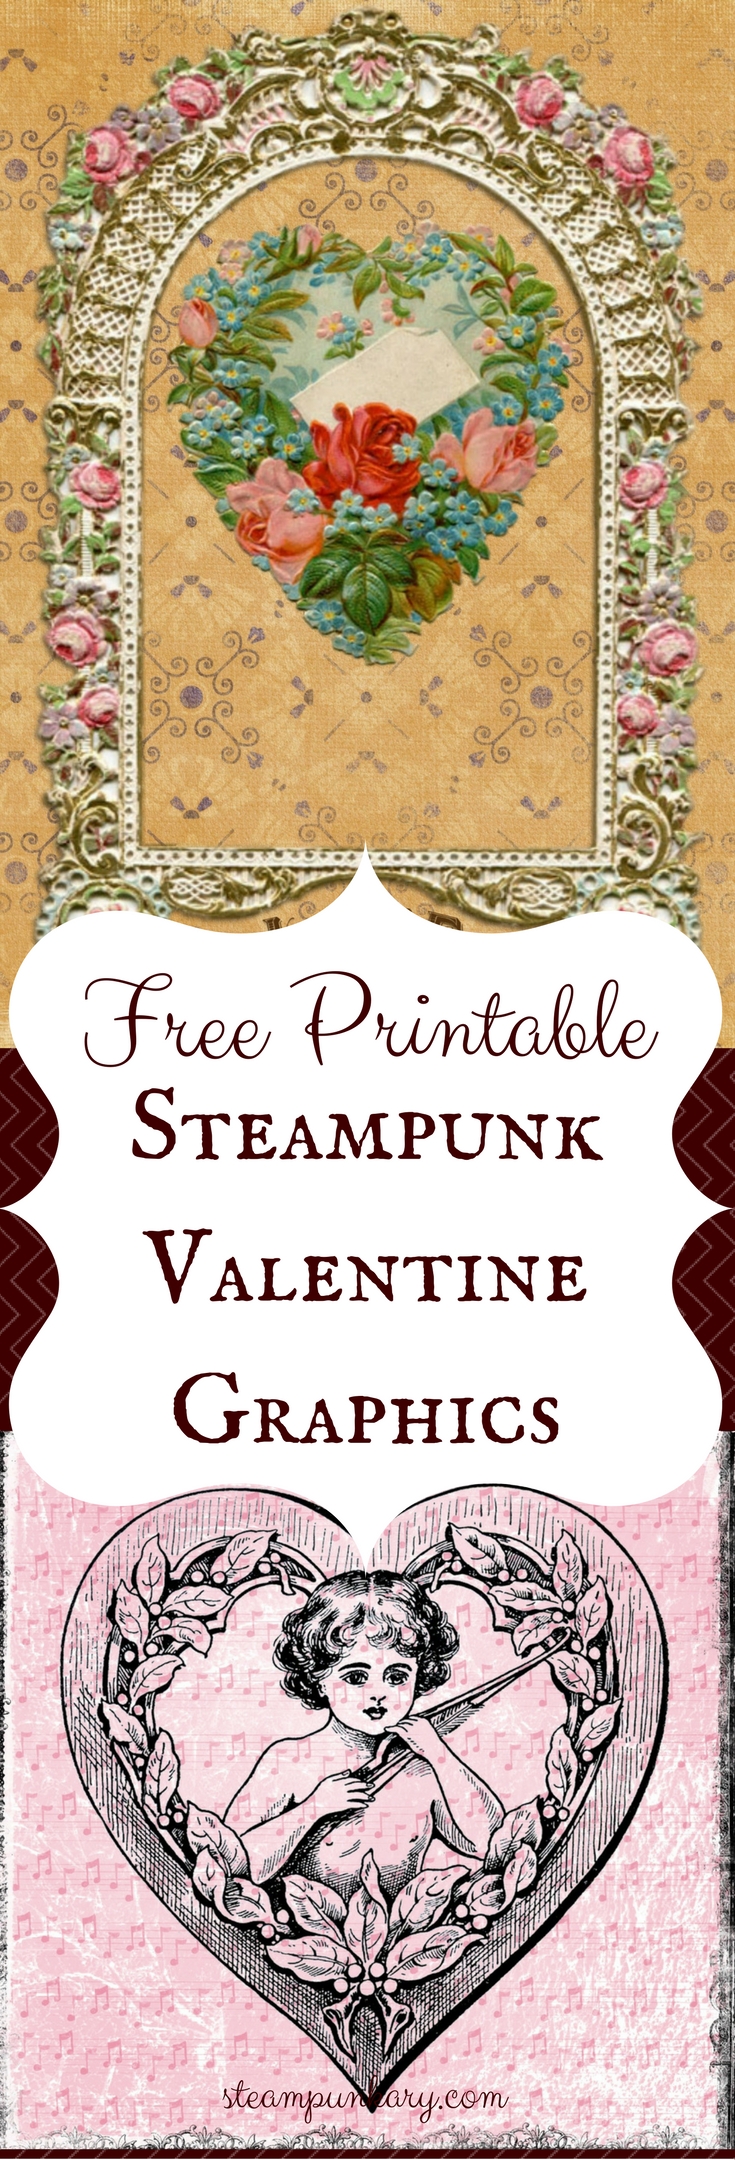 Free Printable Digital Download Steampunk Valentine Graphics